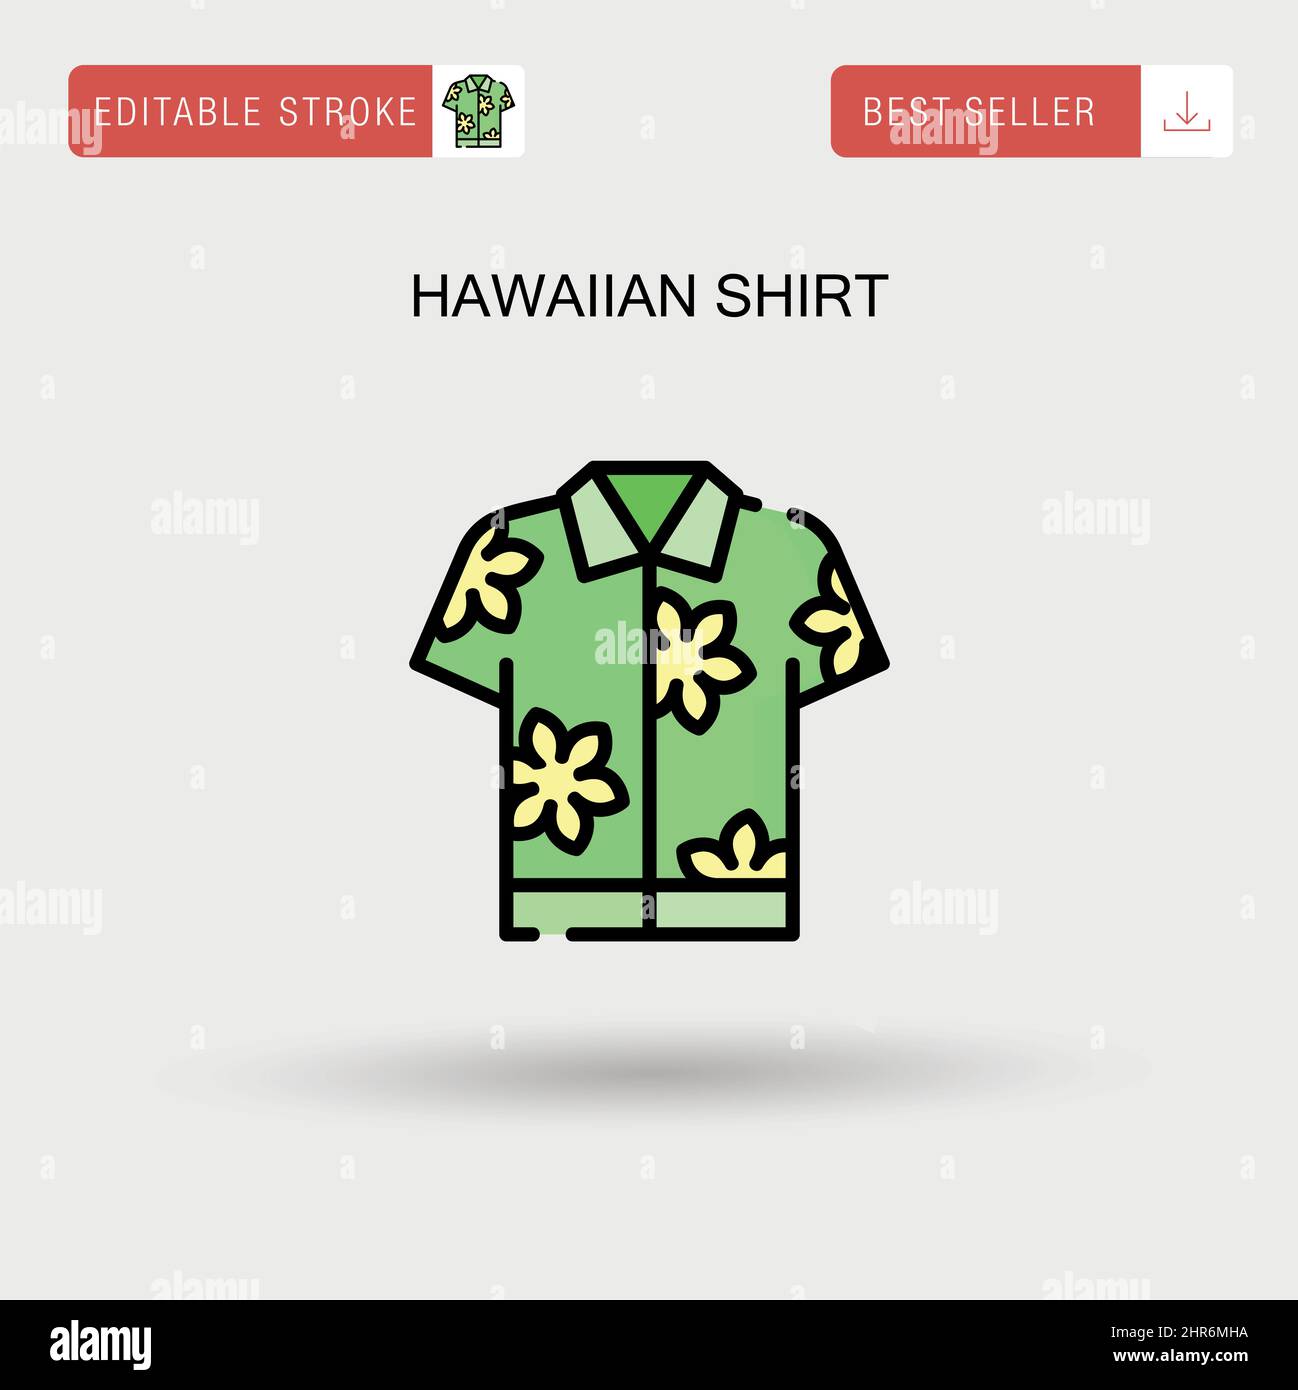 Aloha shirt icon hi-res stock photography and images - Alamy